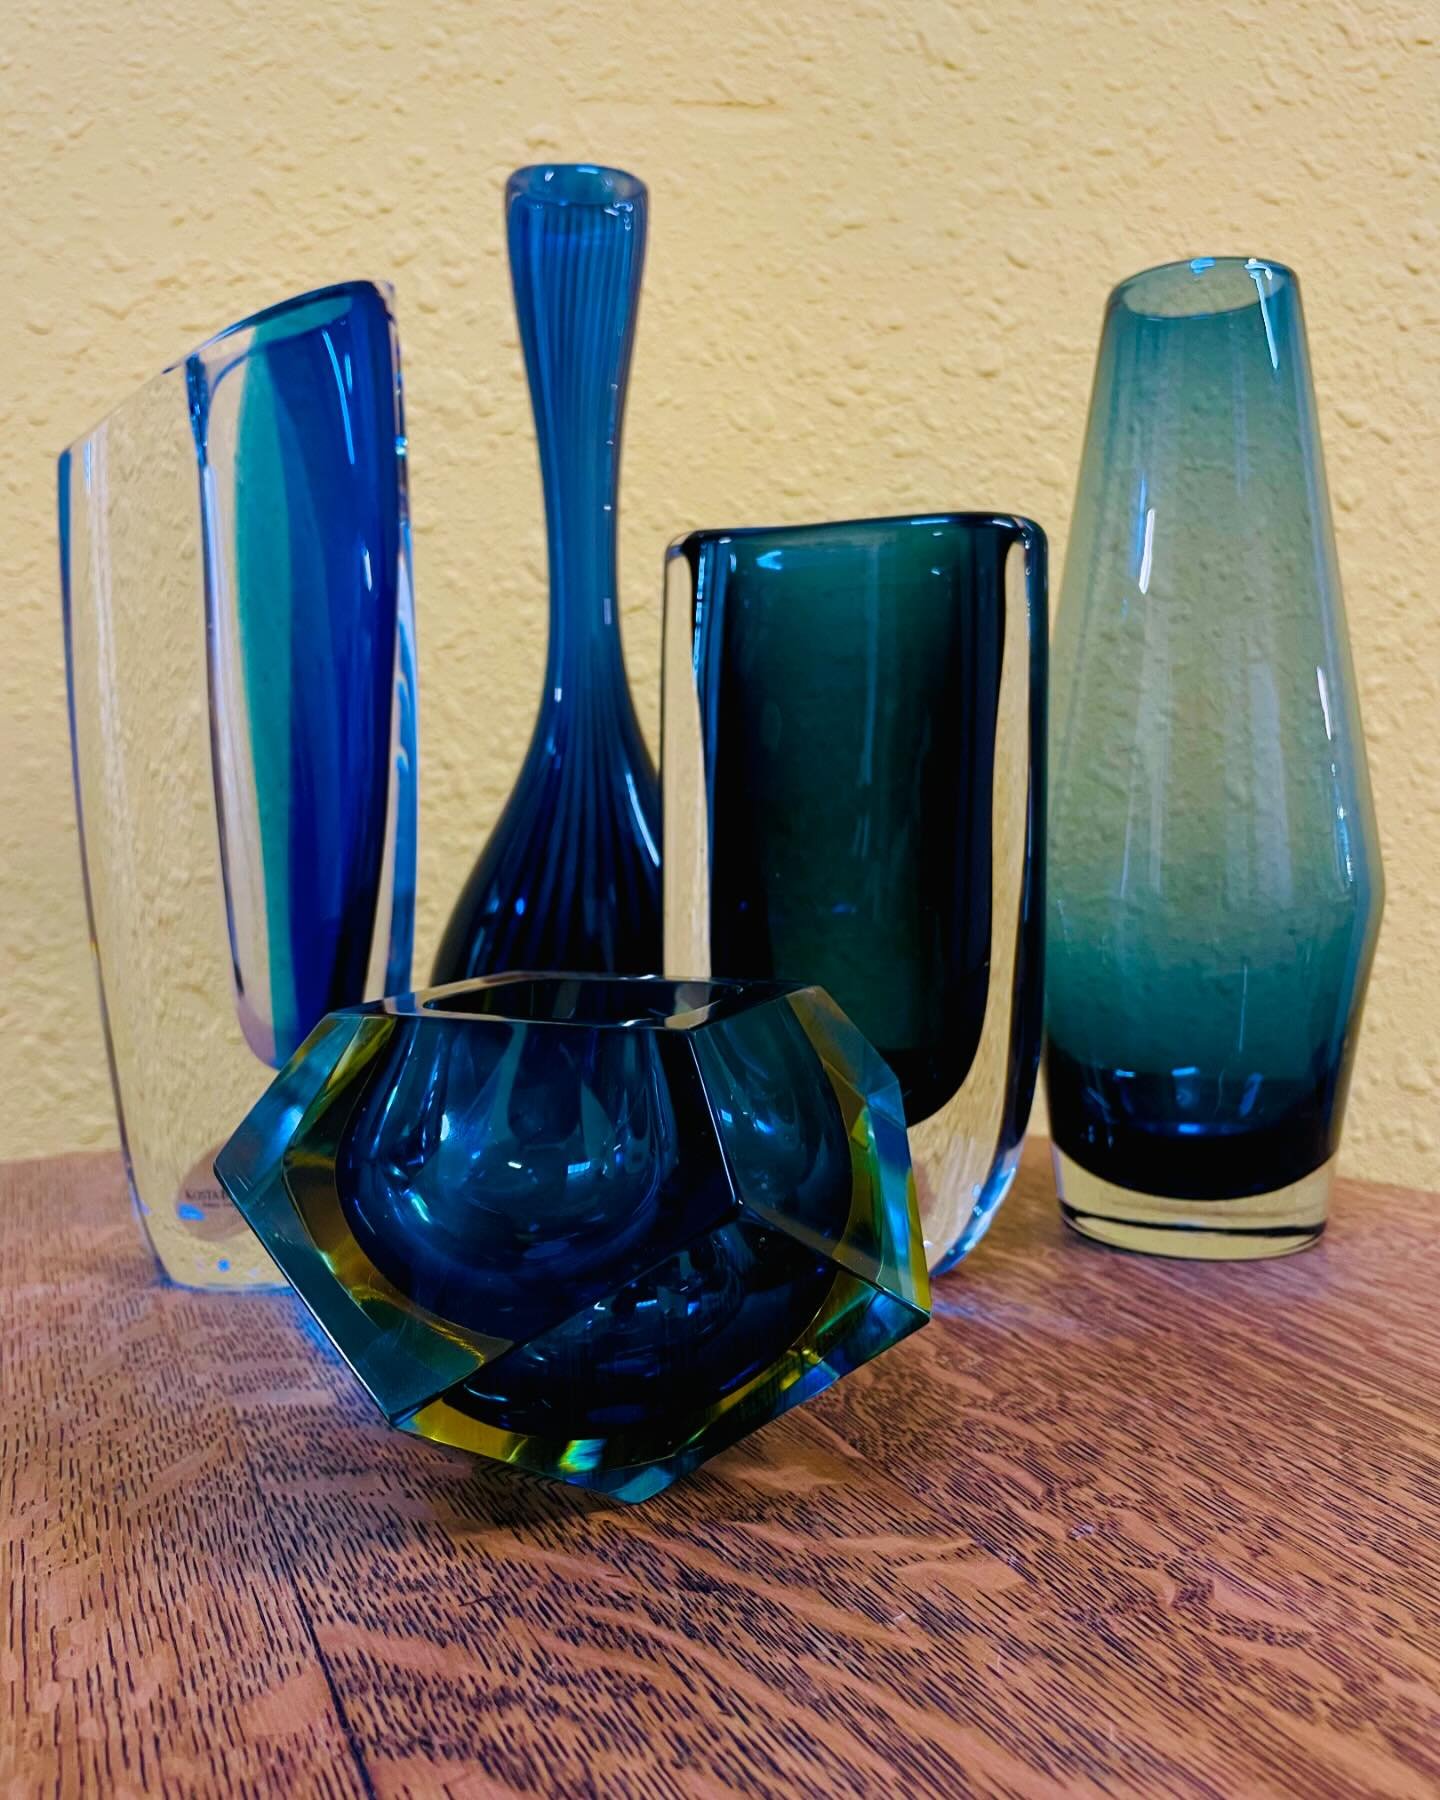 Starting the week off glassy eyed. 
💙🔷🔵
#scandinavianglass #midcenturyglass #italianglass #blueglass